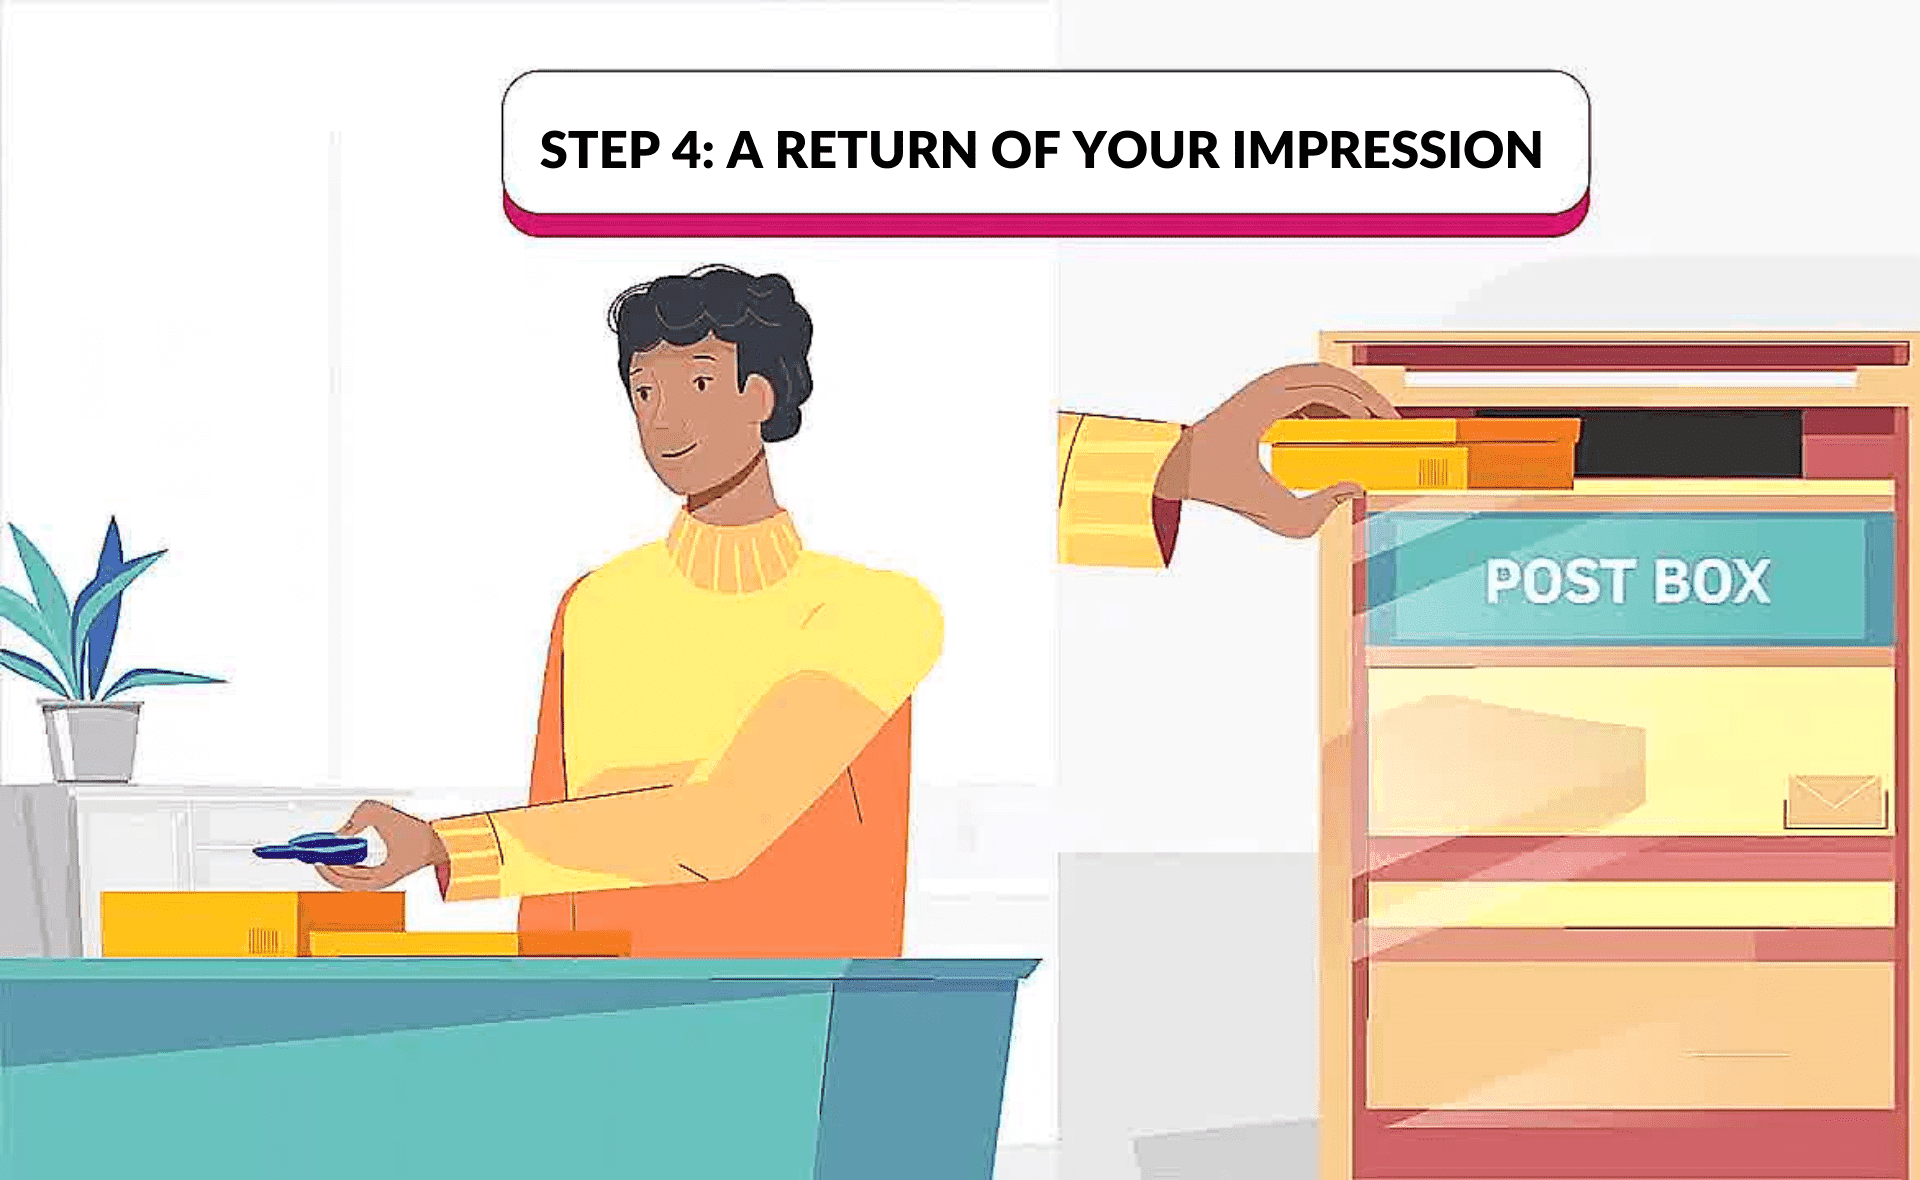 Step 4: A Return of you impression